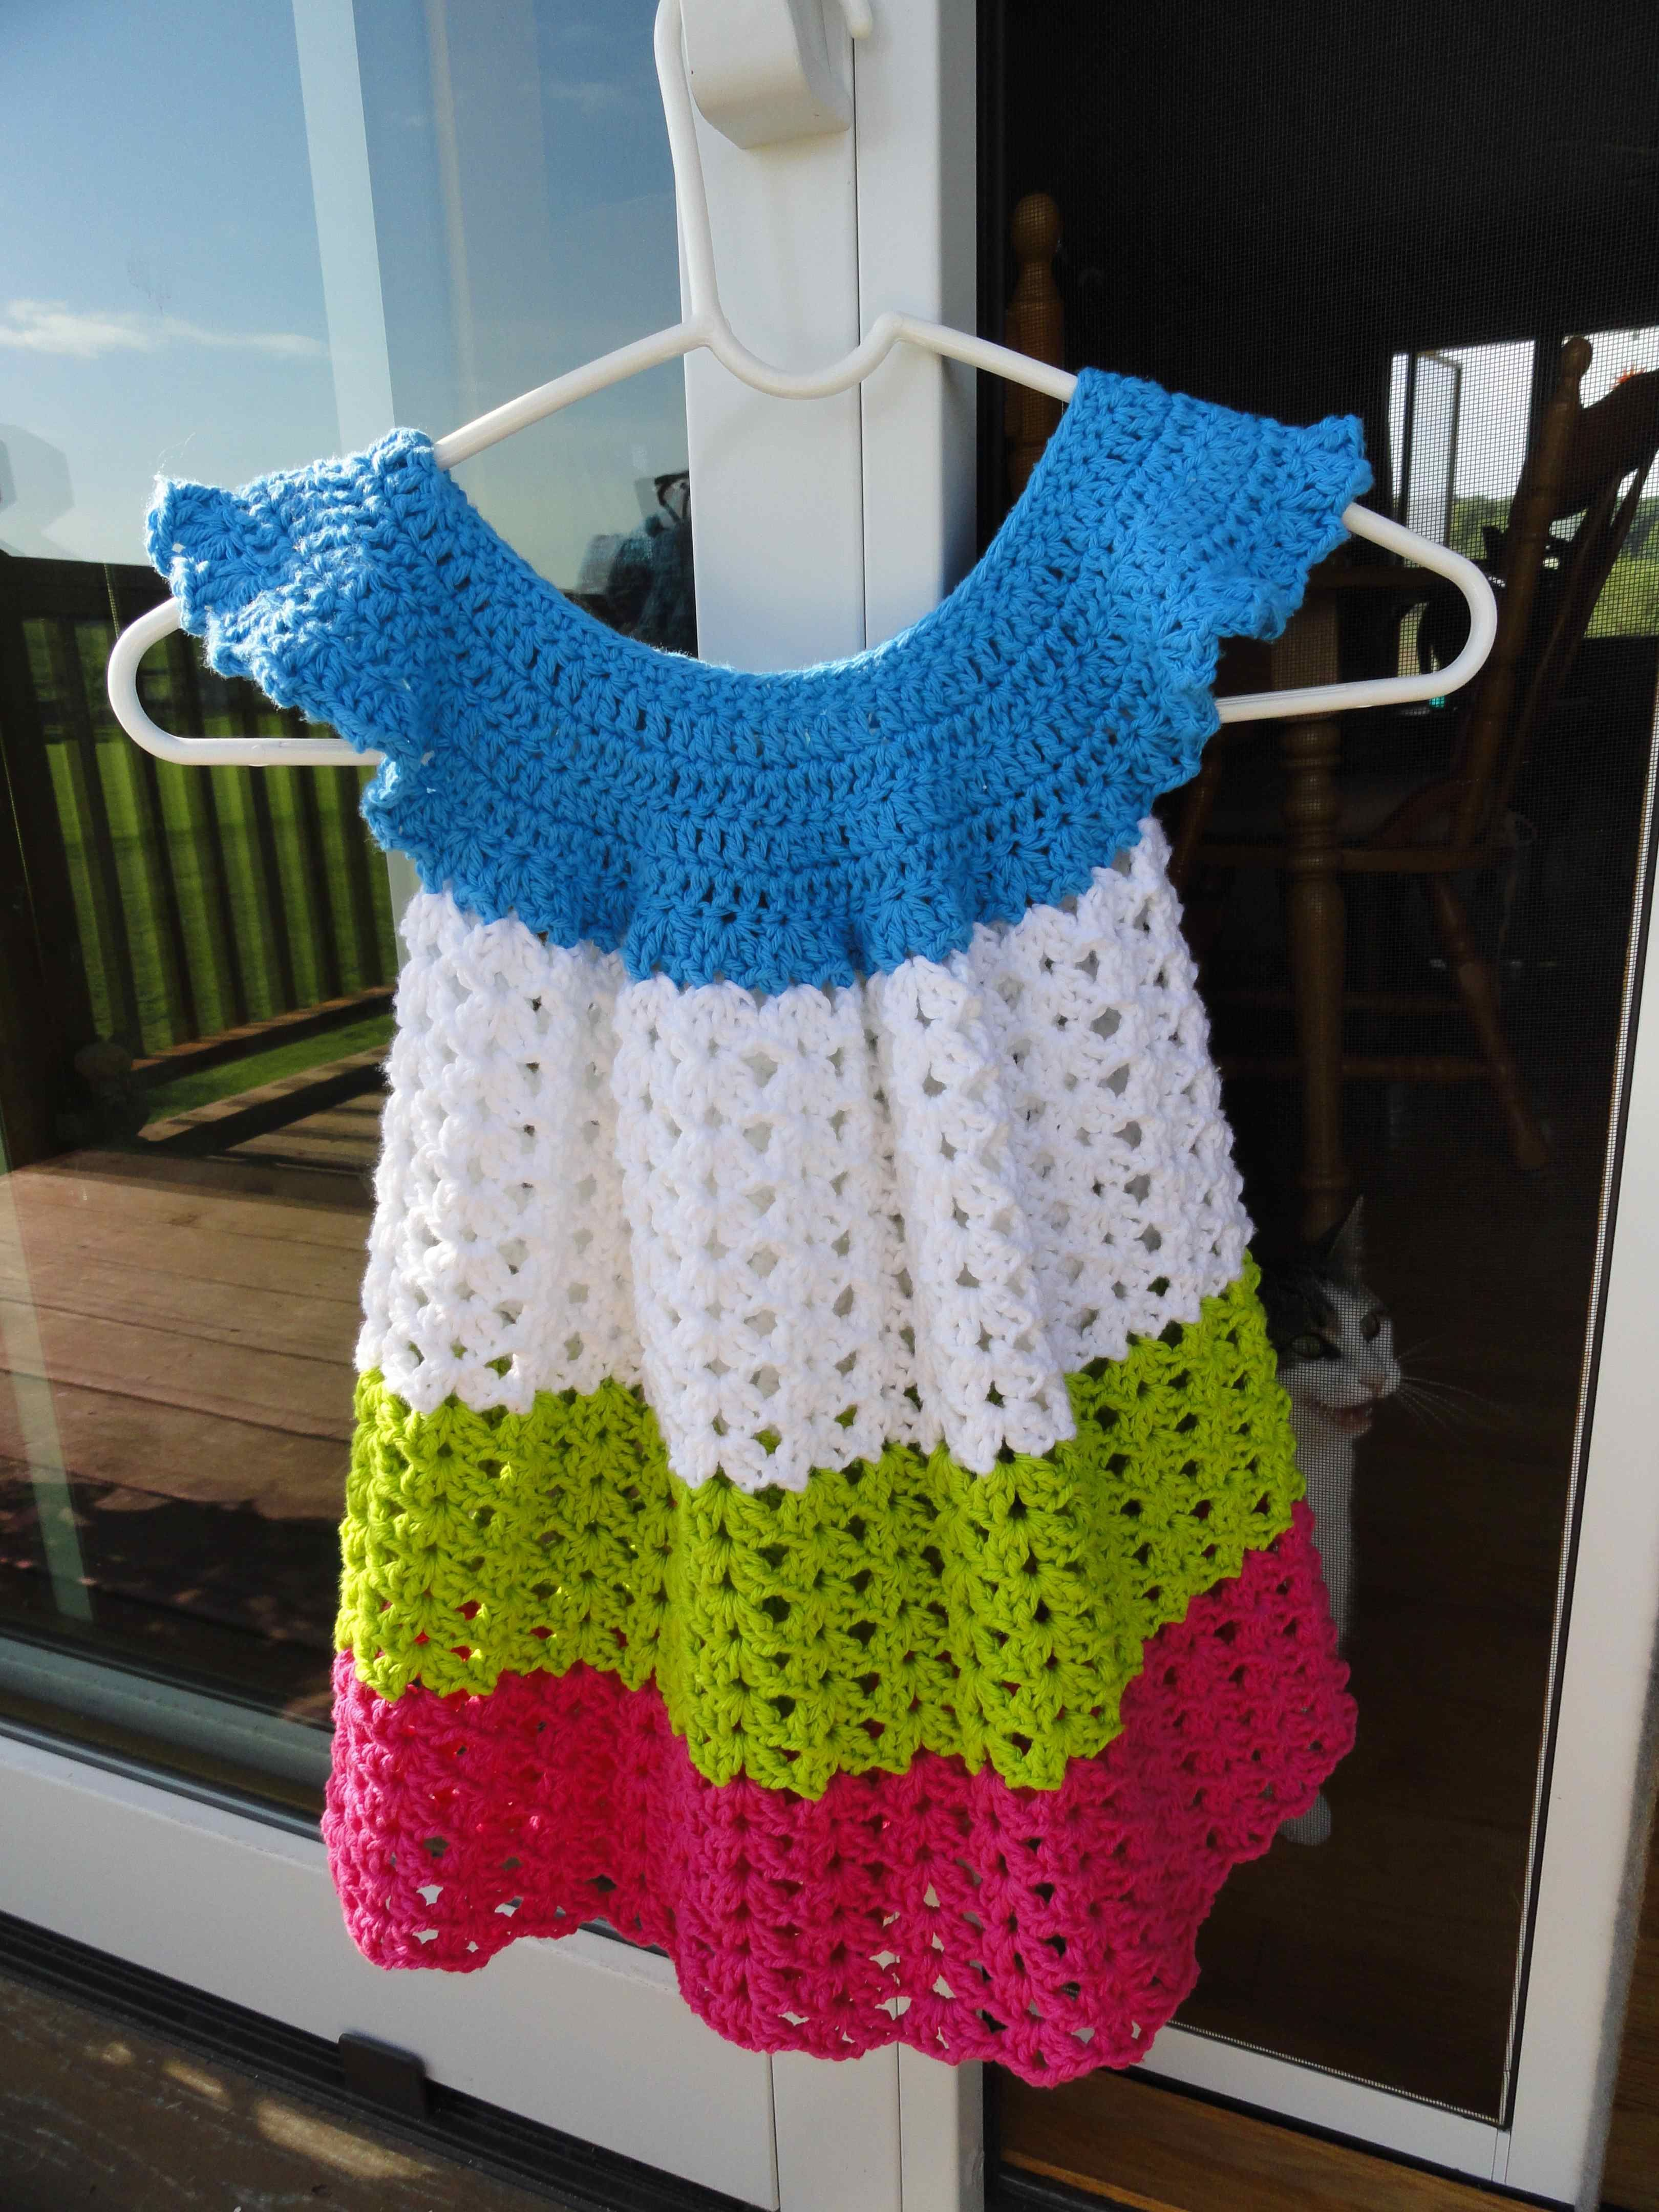 Crochet Baby Pinafore Dress Pattern Crochet Toddler Pinafore Crochet Pinterest Crochet Crochet